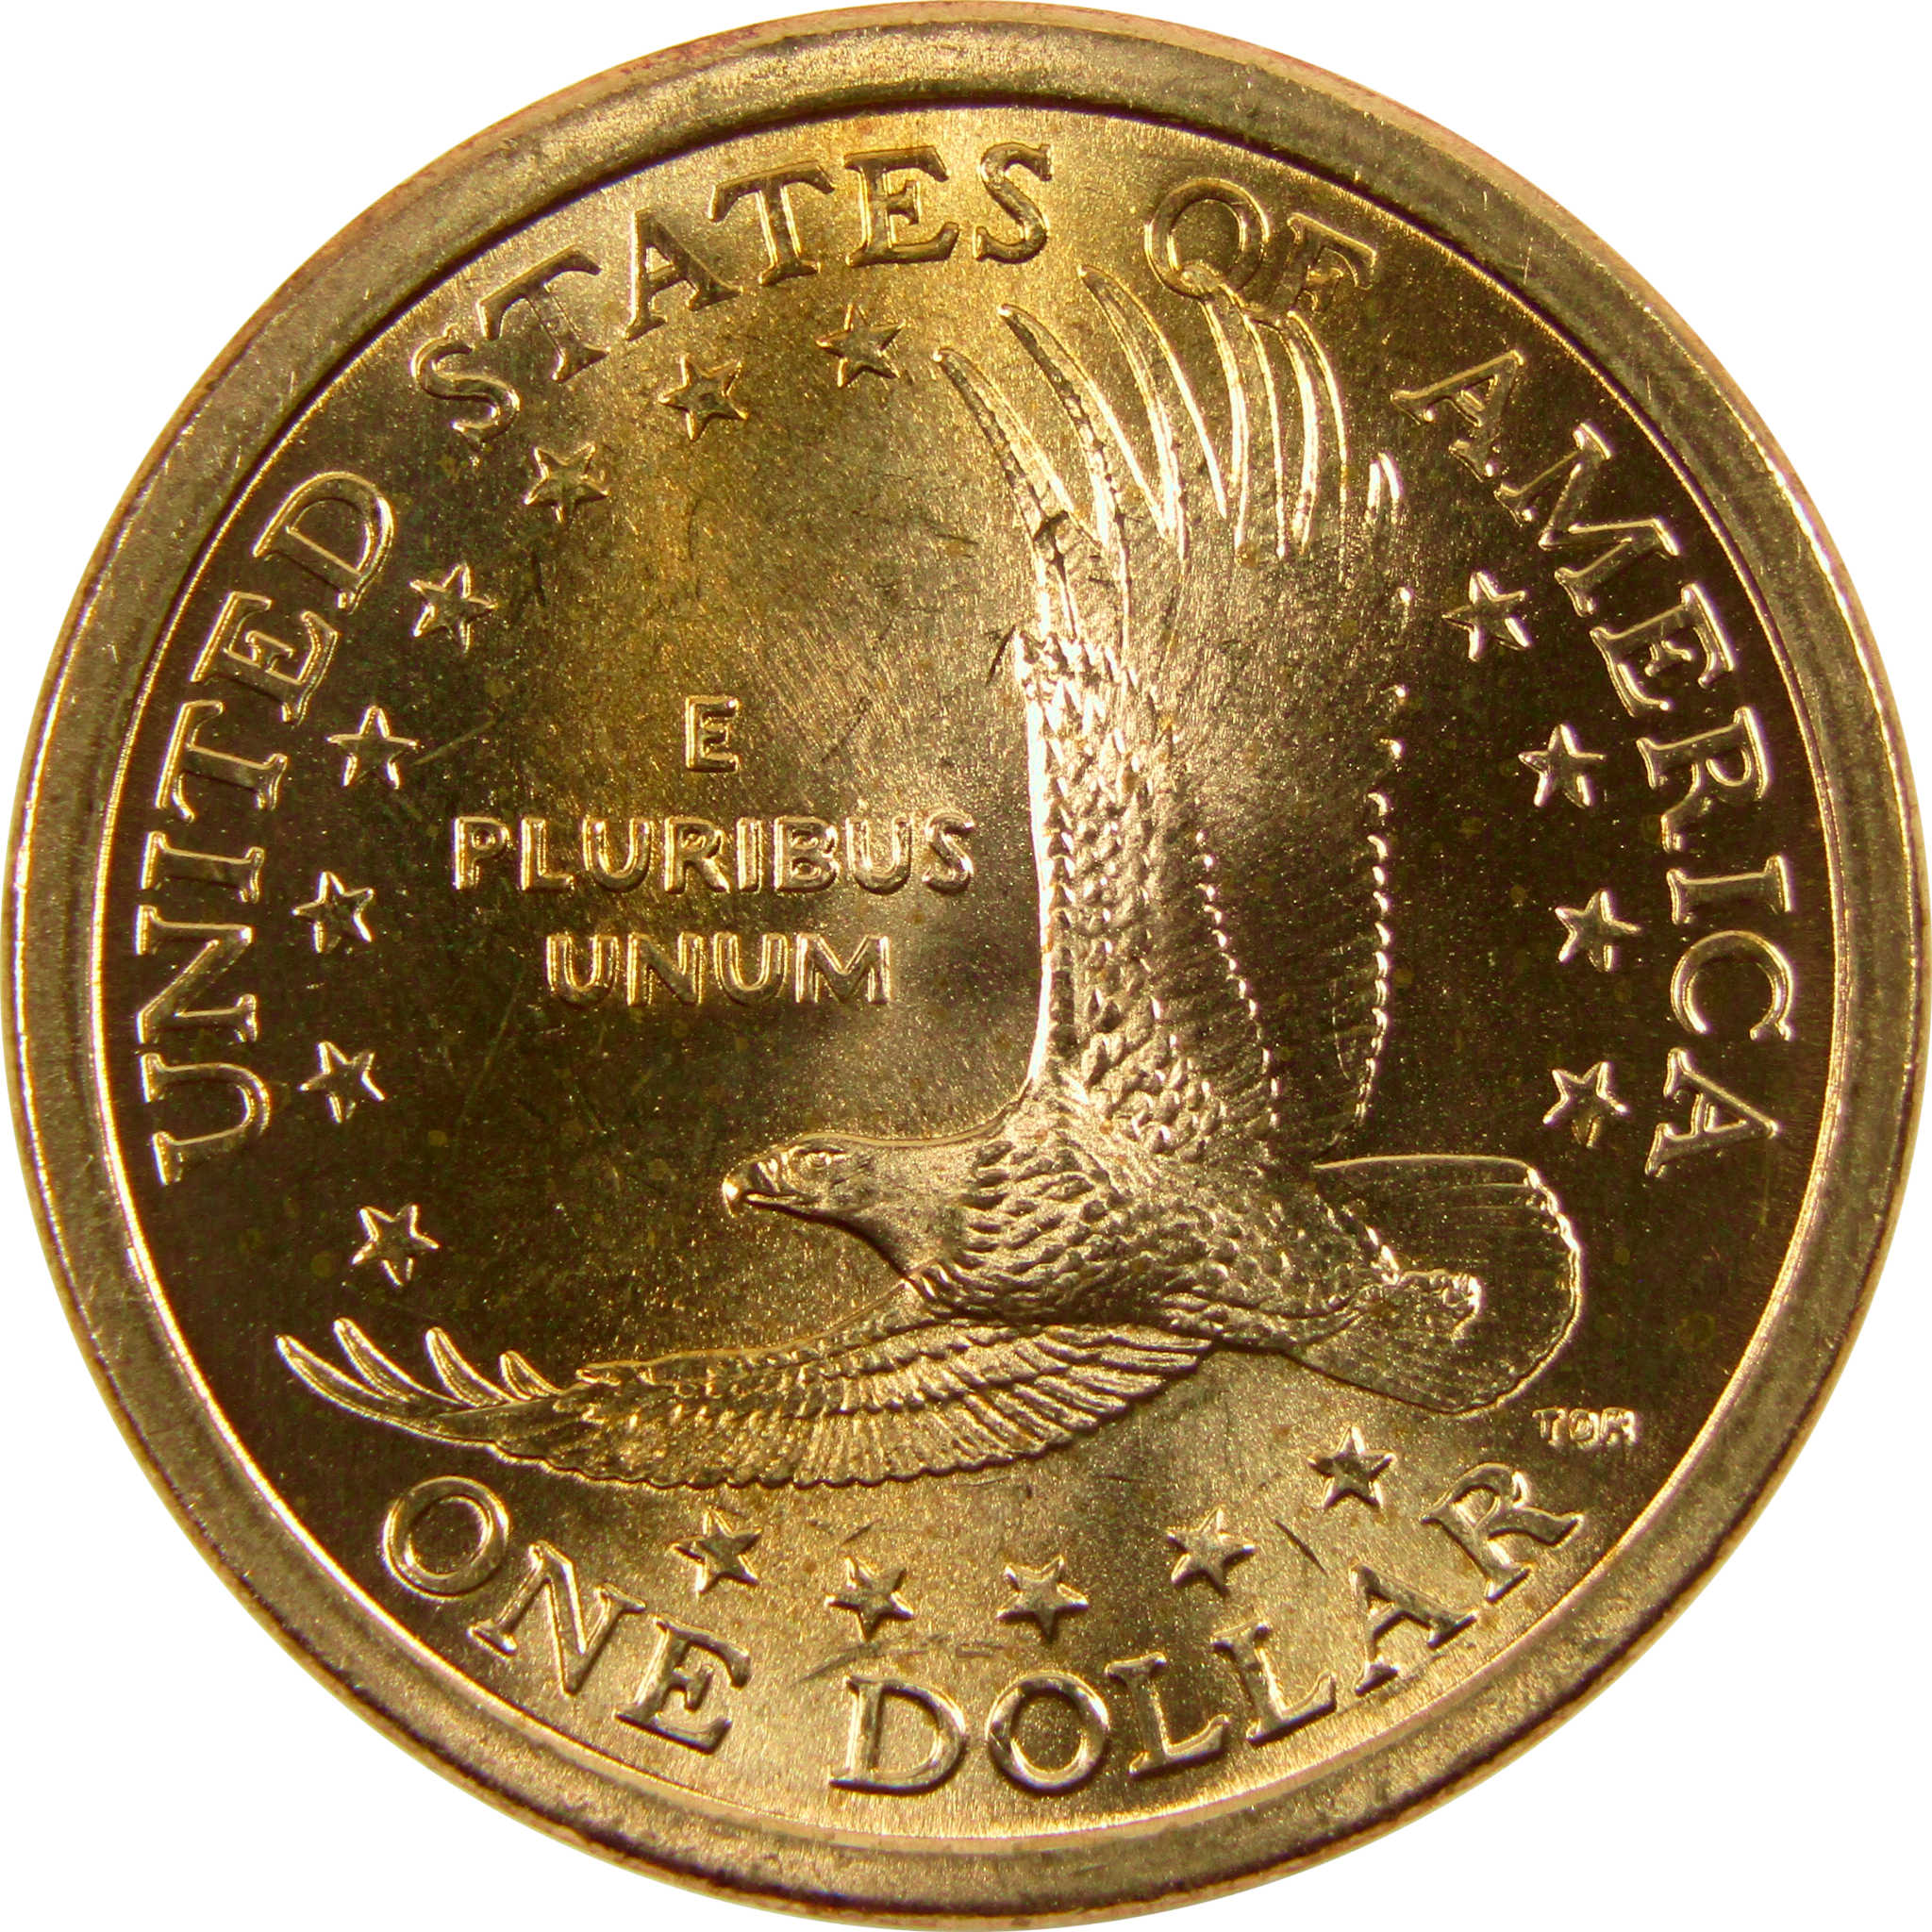 2005 P Sacagawea Native American Dollar BU Uncirculated $1 Coin